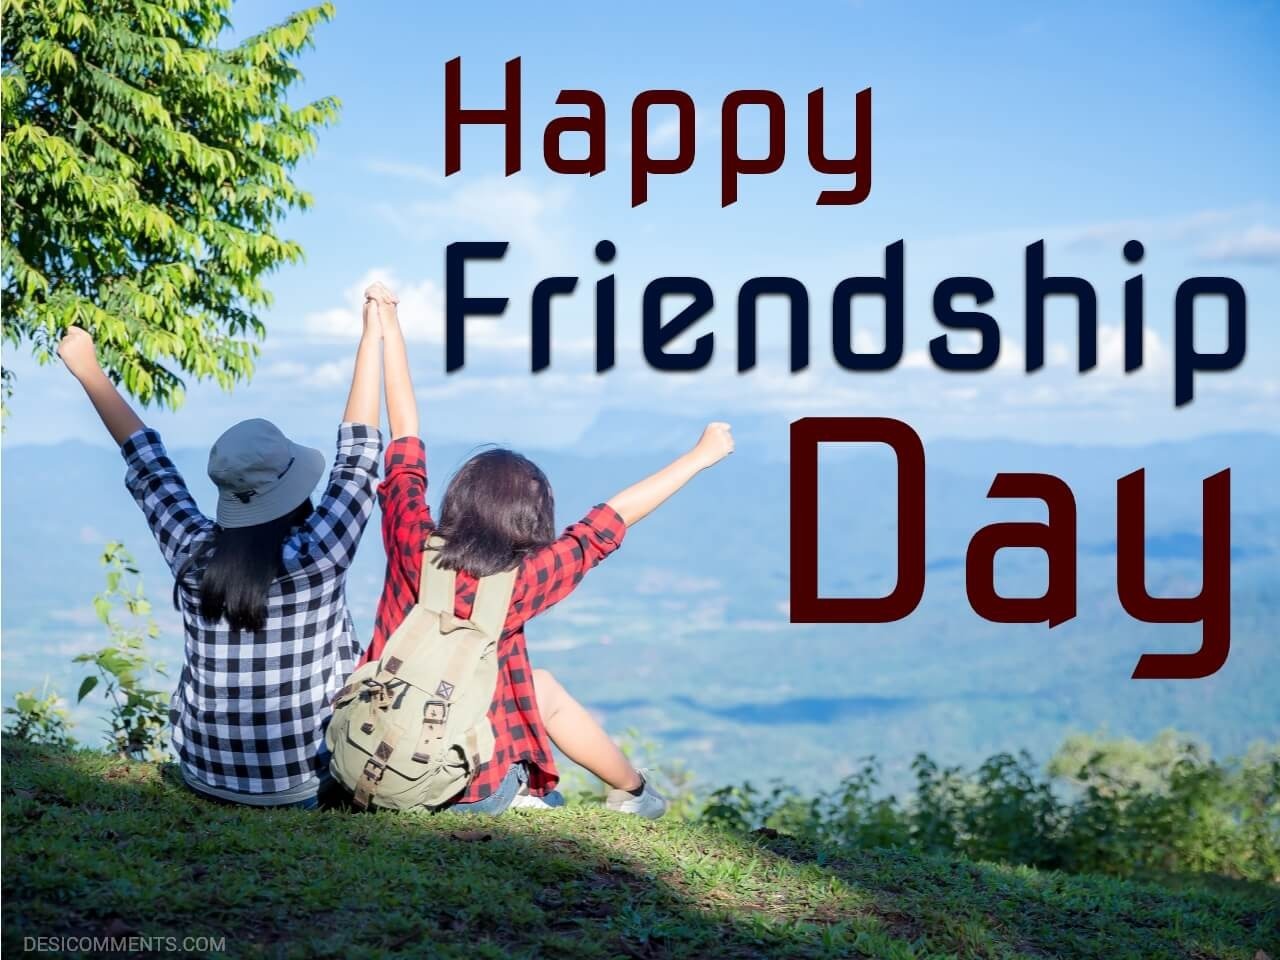 Happy Friendship Day Picture - DesiComments.com